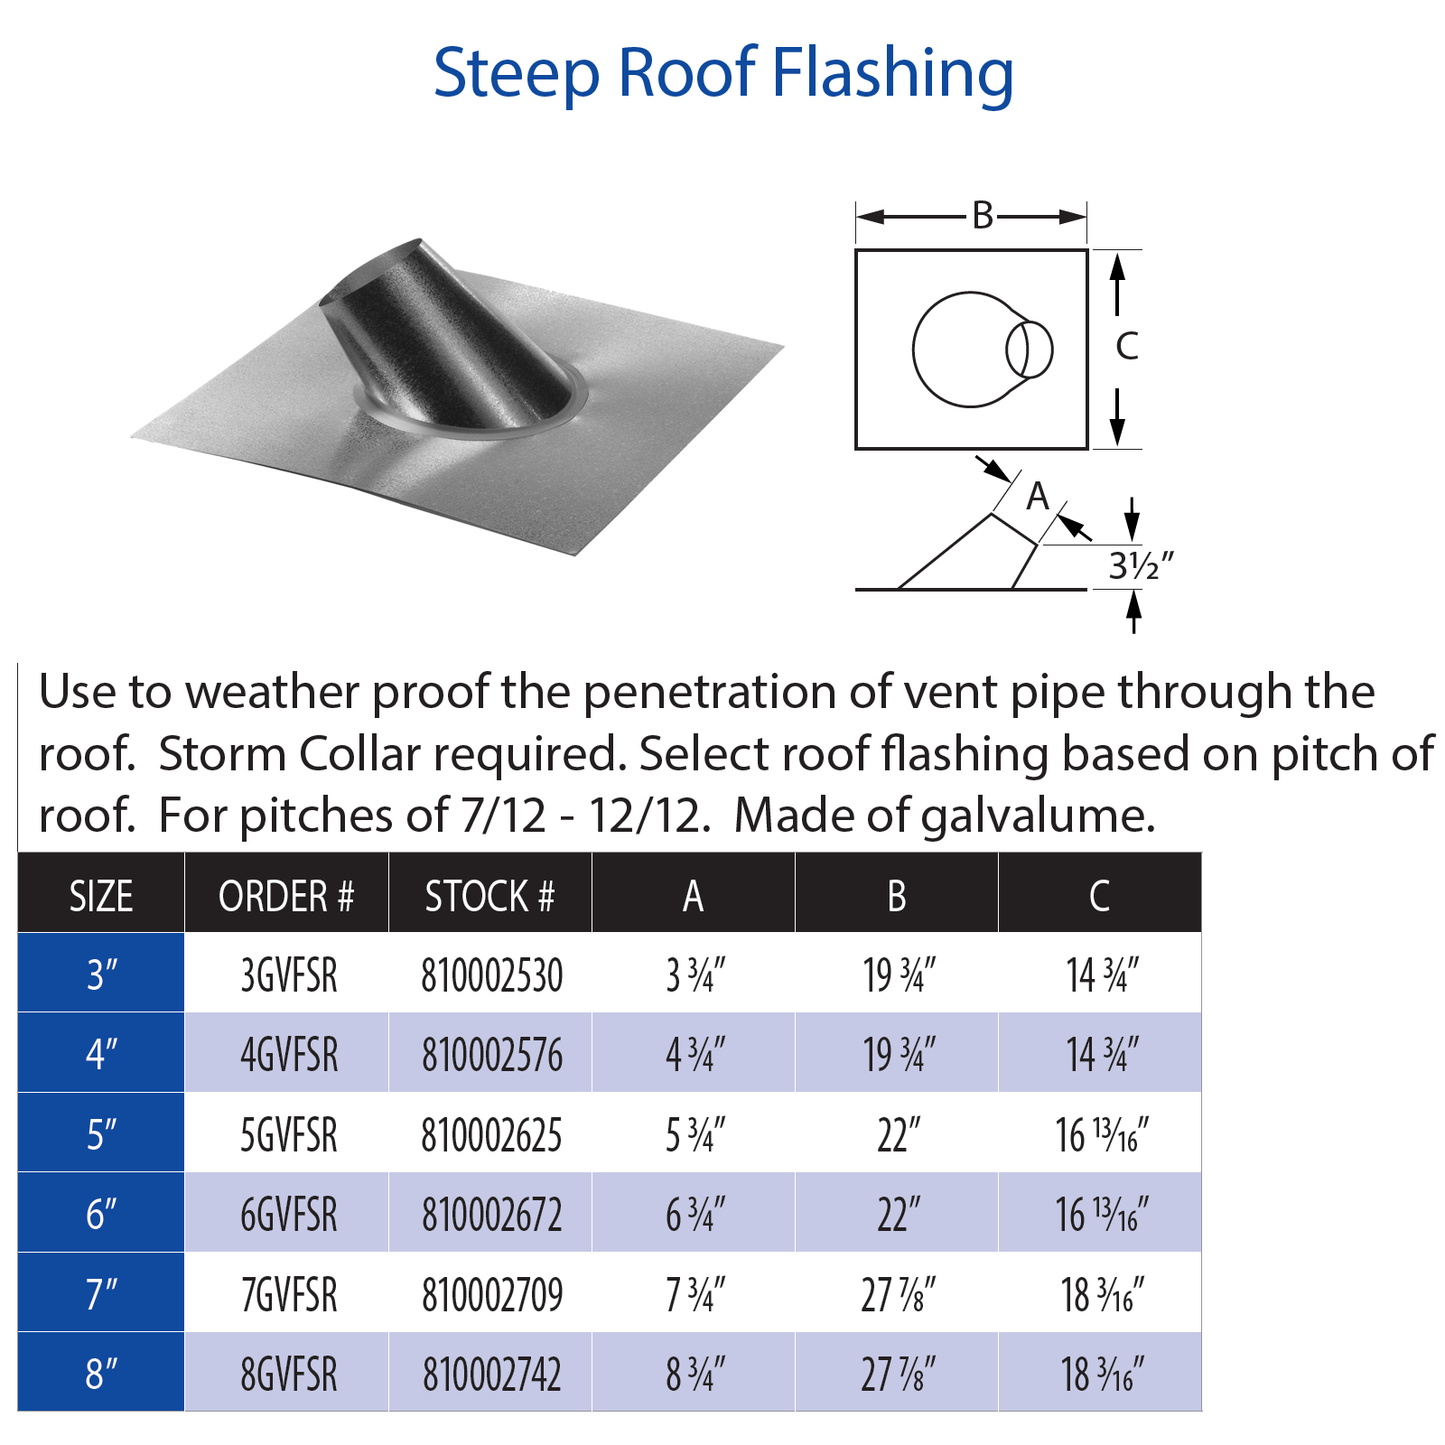 DuraVent Type B Steep Roof Flashing | 5GVFSR